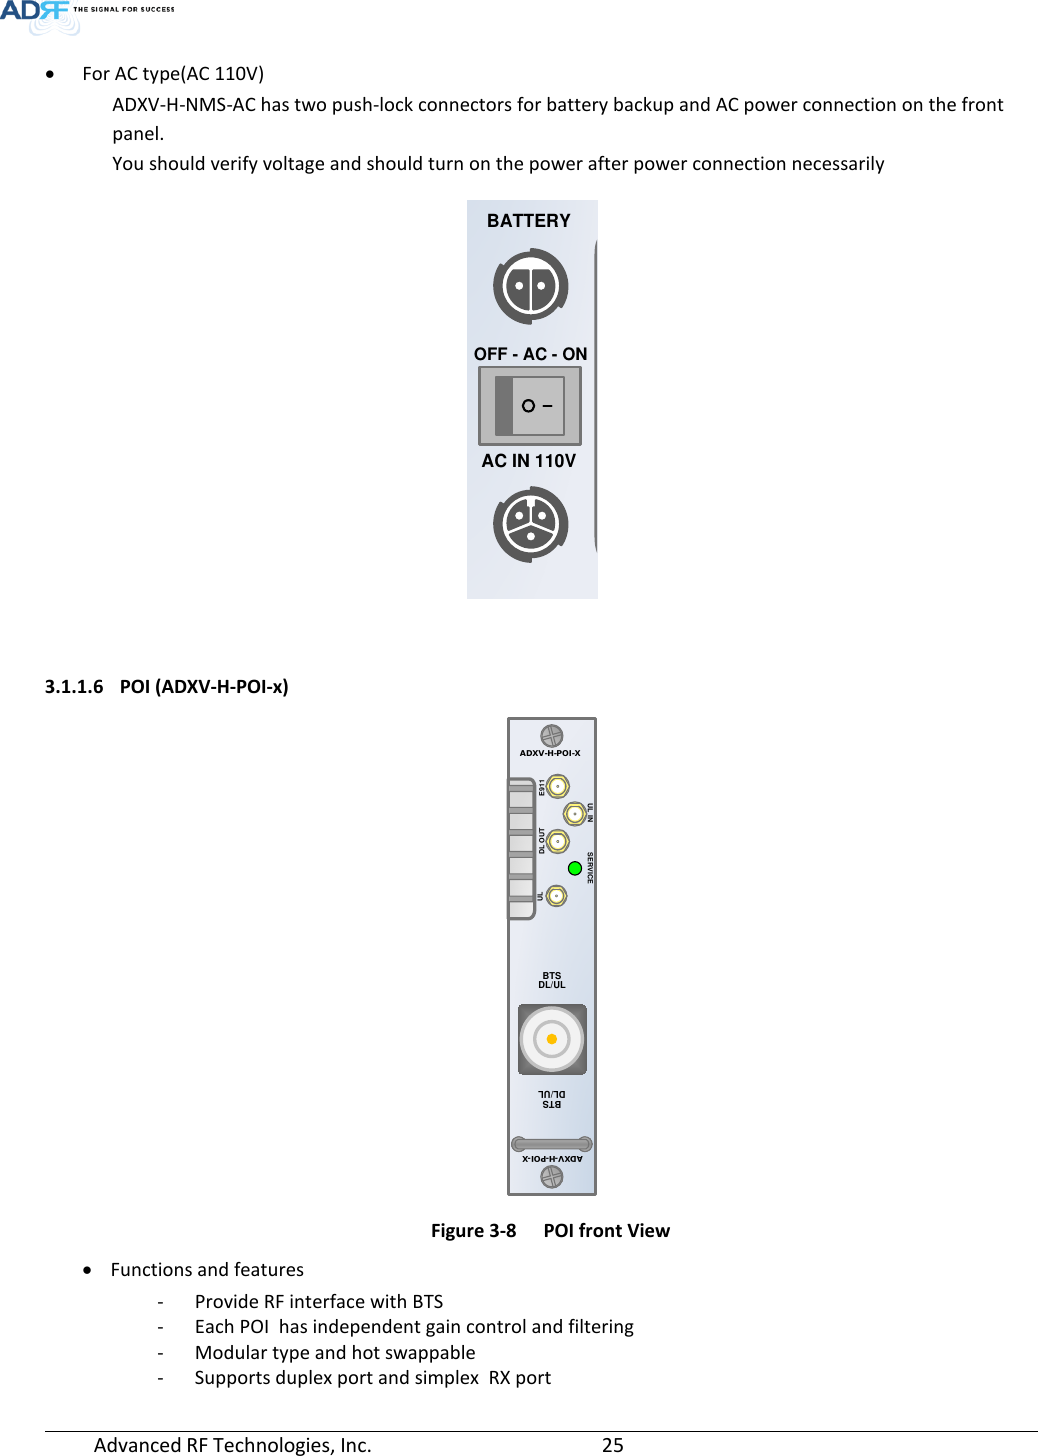 Page 25 of ADRF KOREA ADXV-R-78P-NA DAS (Distributed Antenna System) User Manual ADXV DAS